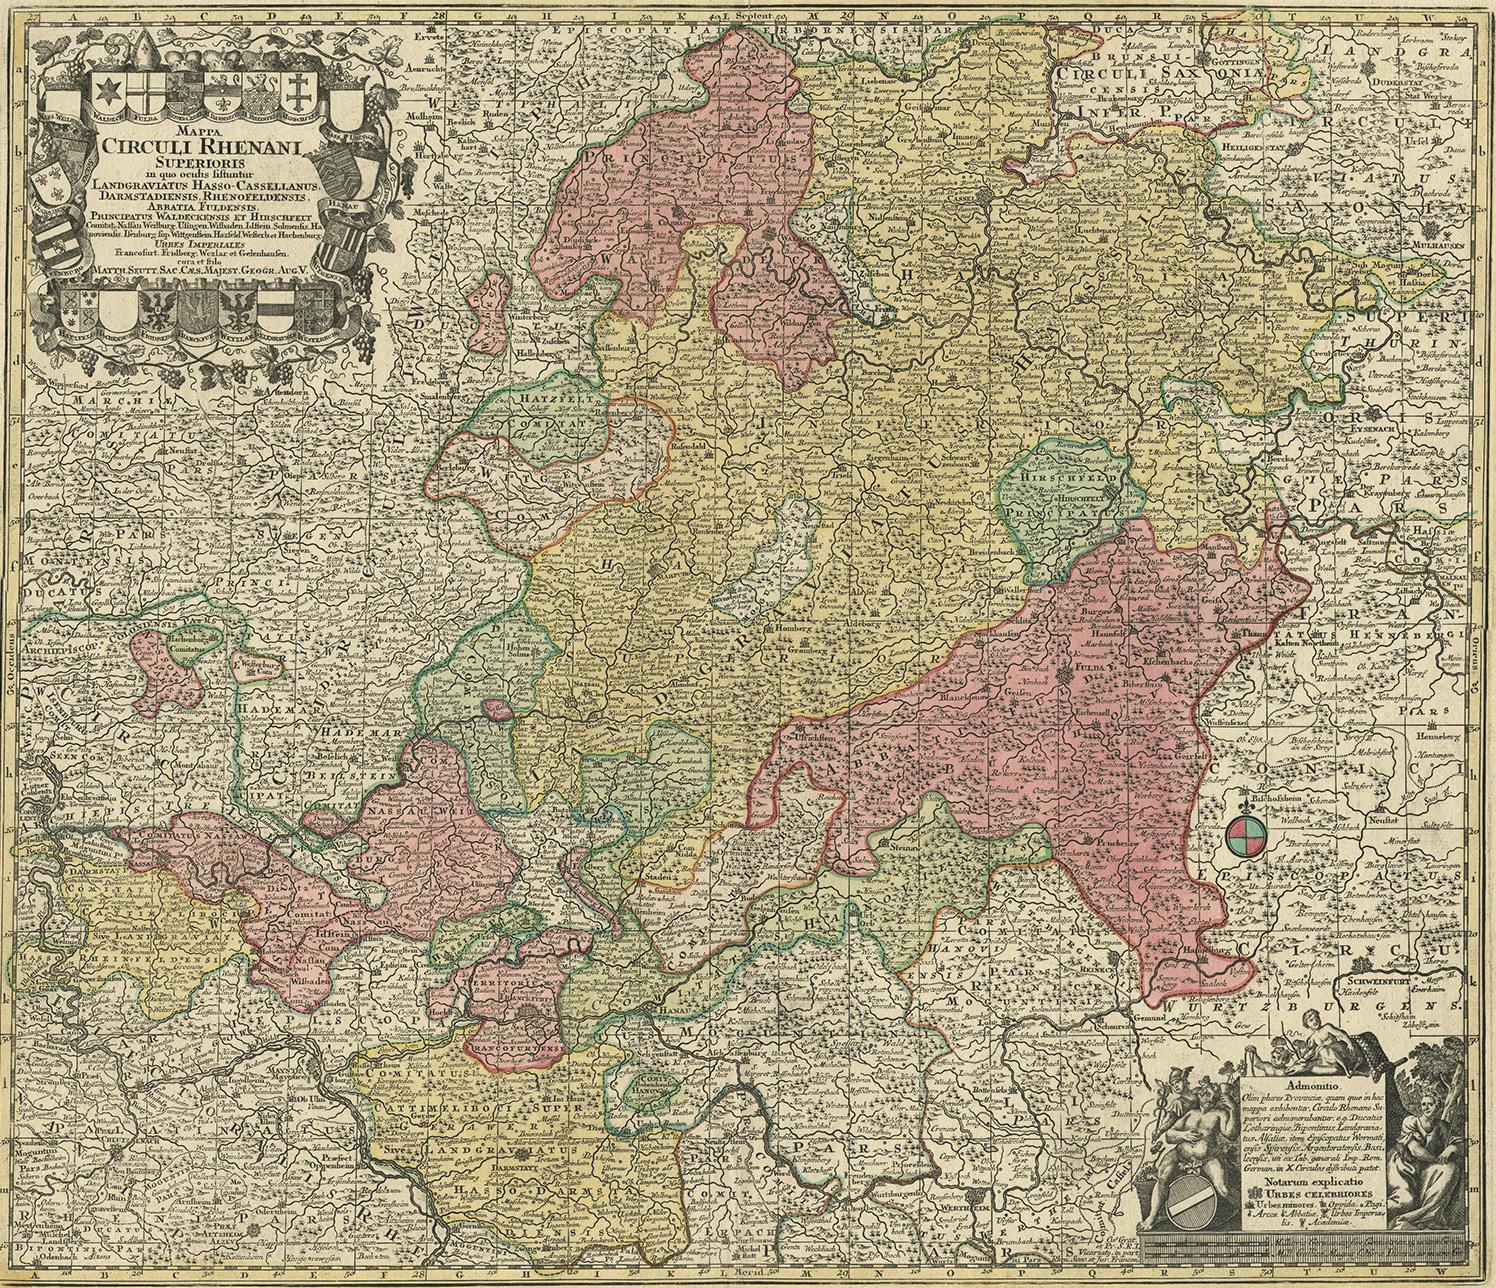 Antique map titled 'Mappa Circuli Rhenani Superioris (..). Original map with hand coloring of part of Germany. It includes the region of Kassel, Göttingen, Eisenach, Schweinfurt, Wertheim, Darmstadt, Frankfurt, Mainz, Koblenz. Includes decorative